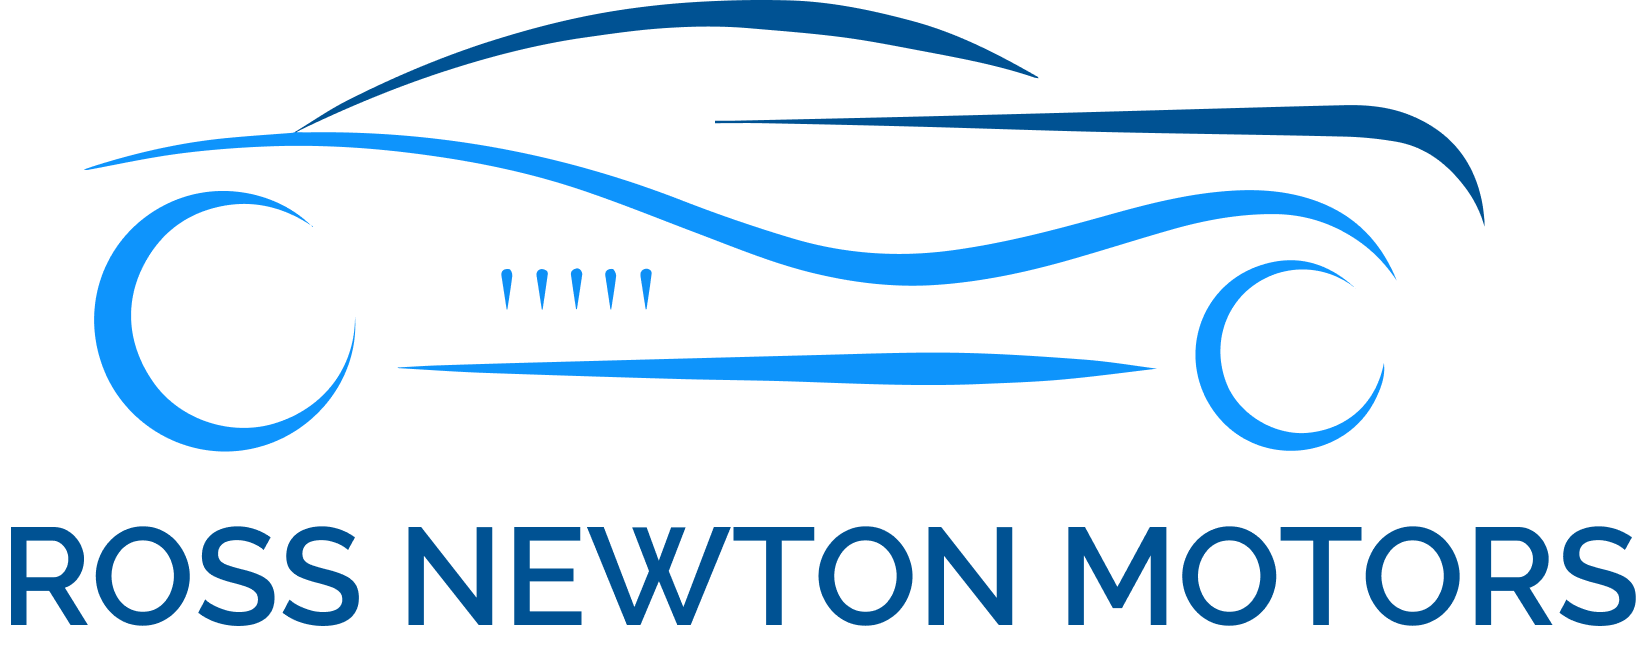 Ross Newton Motors logo